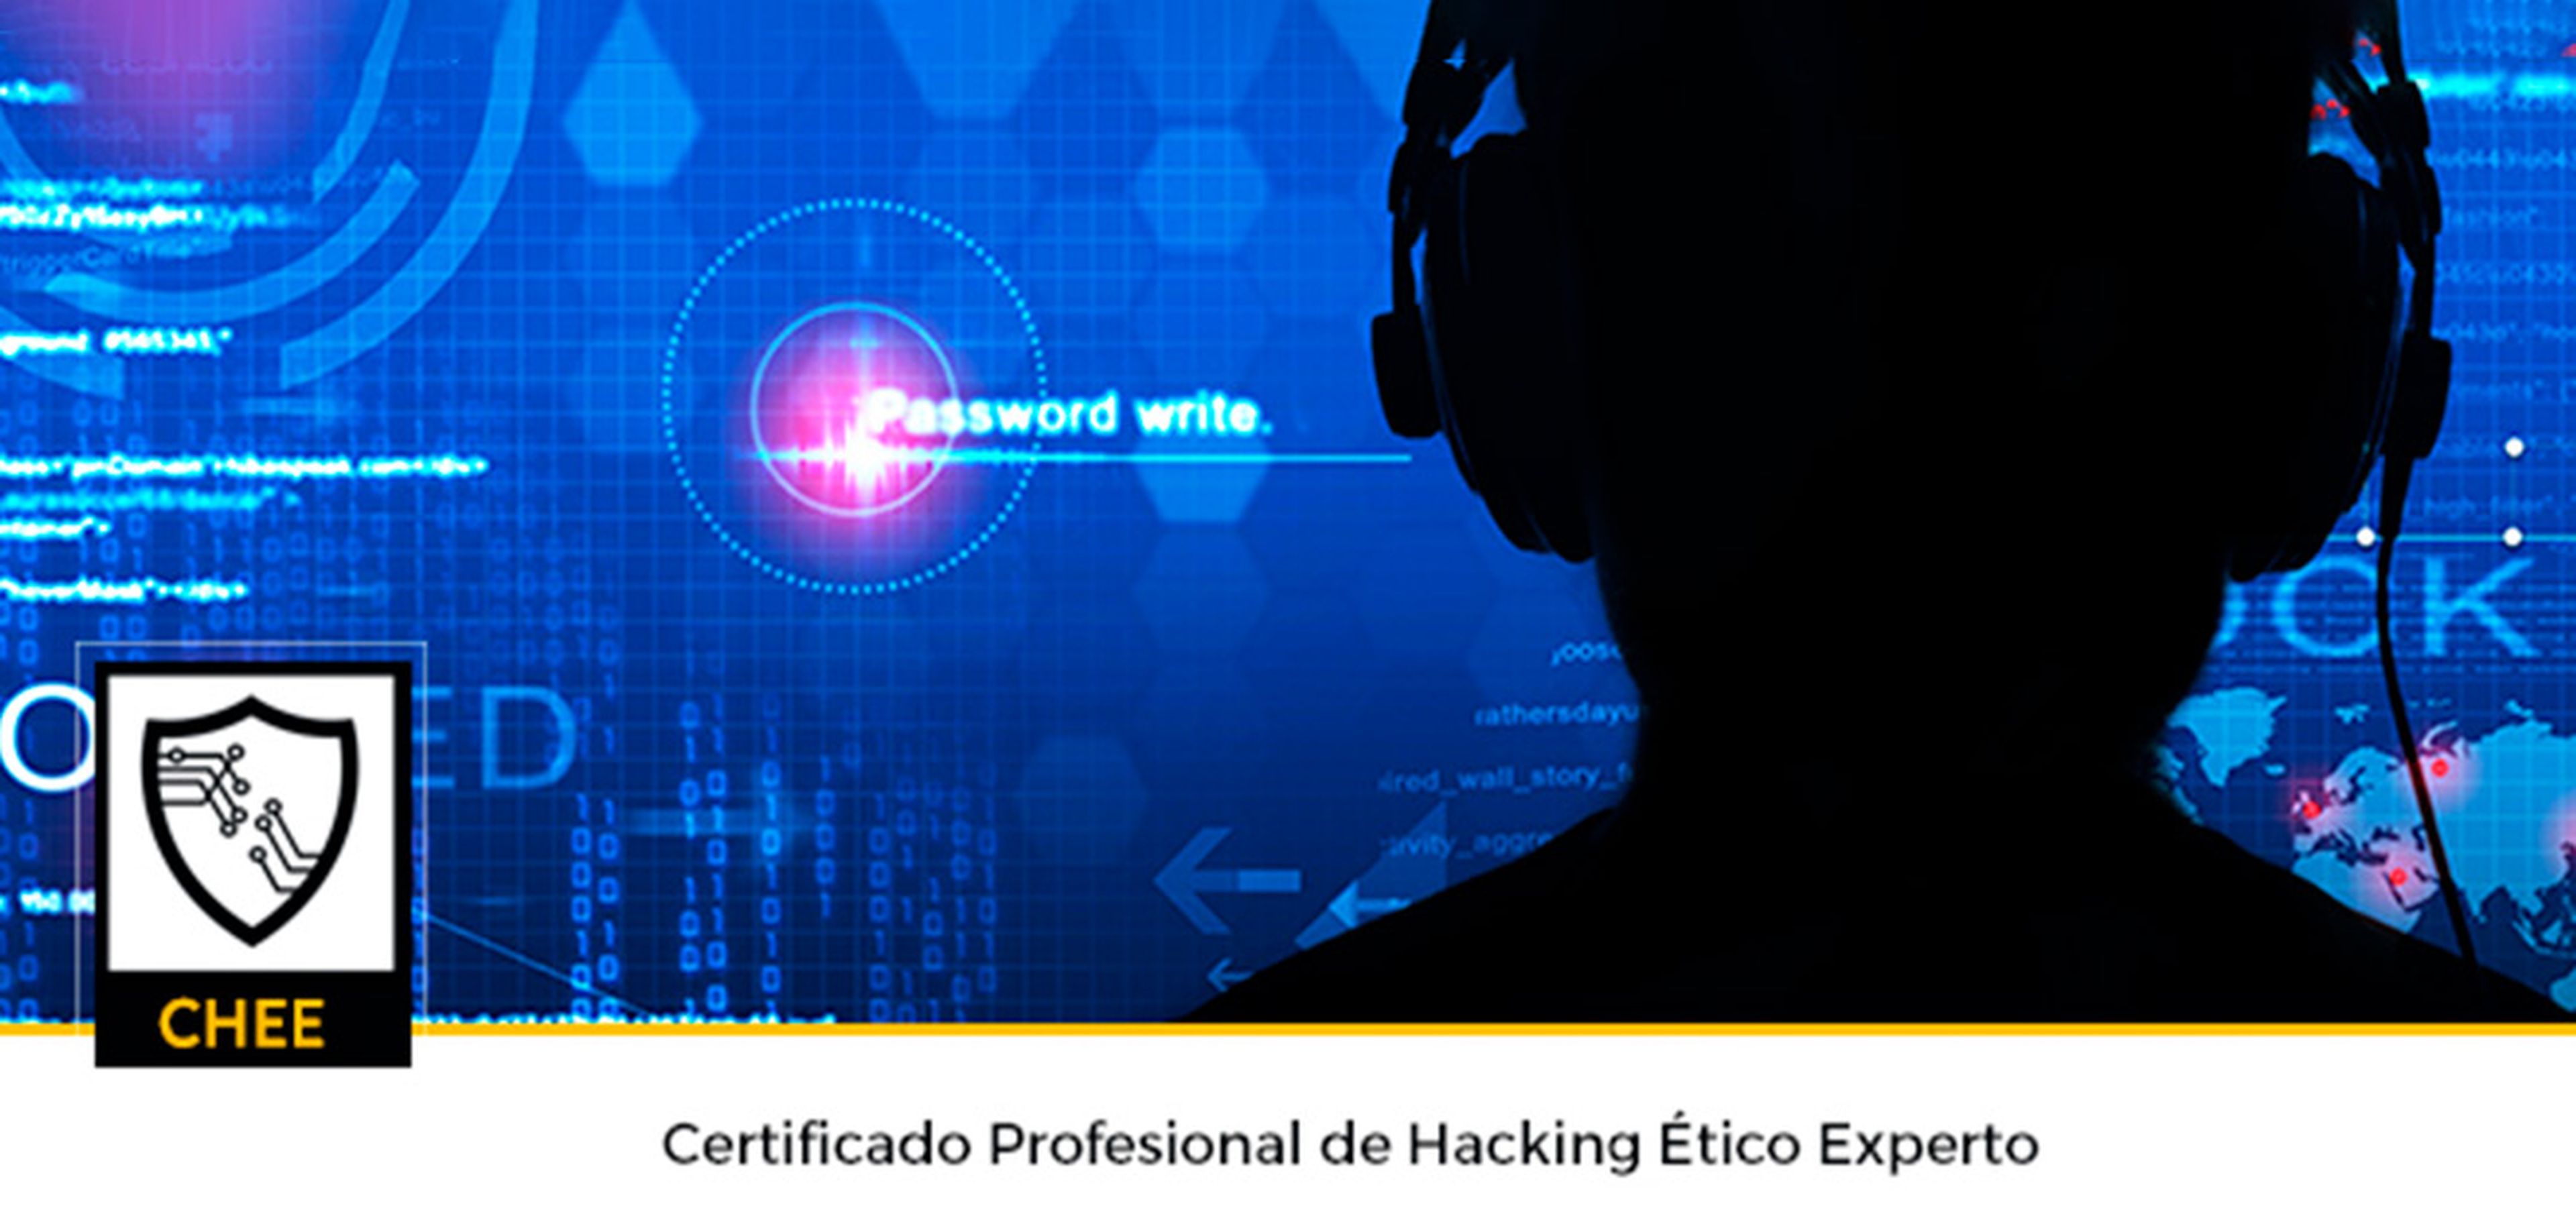 Certificado profesional de hacking ético experto